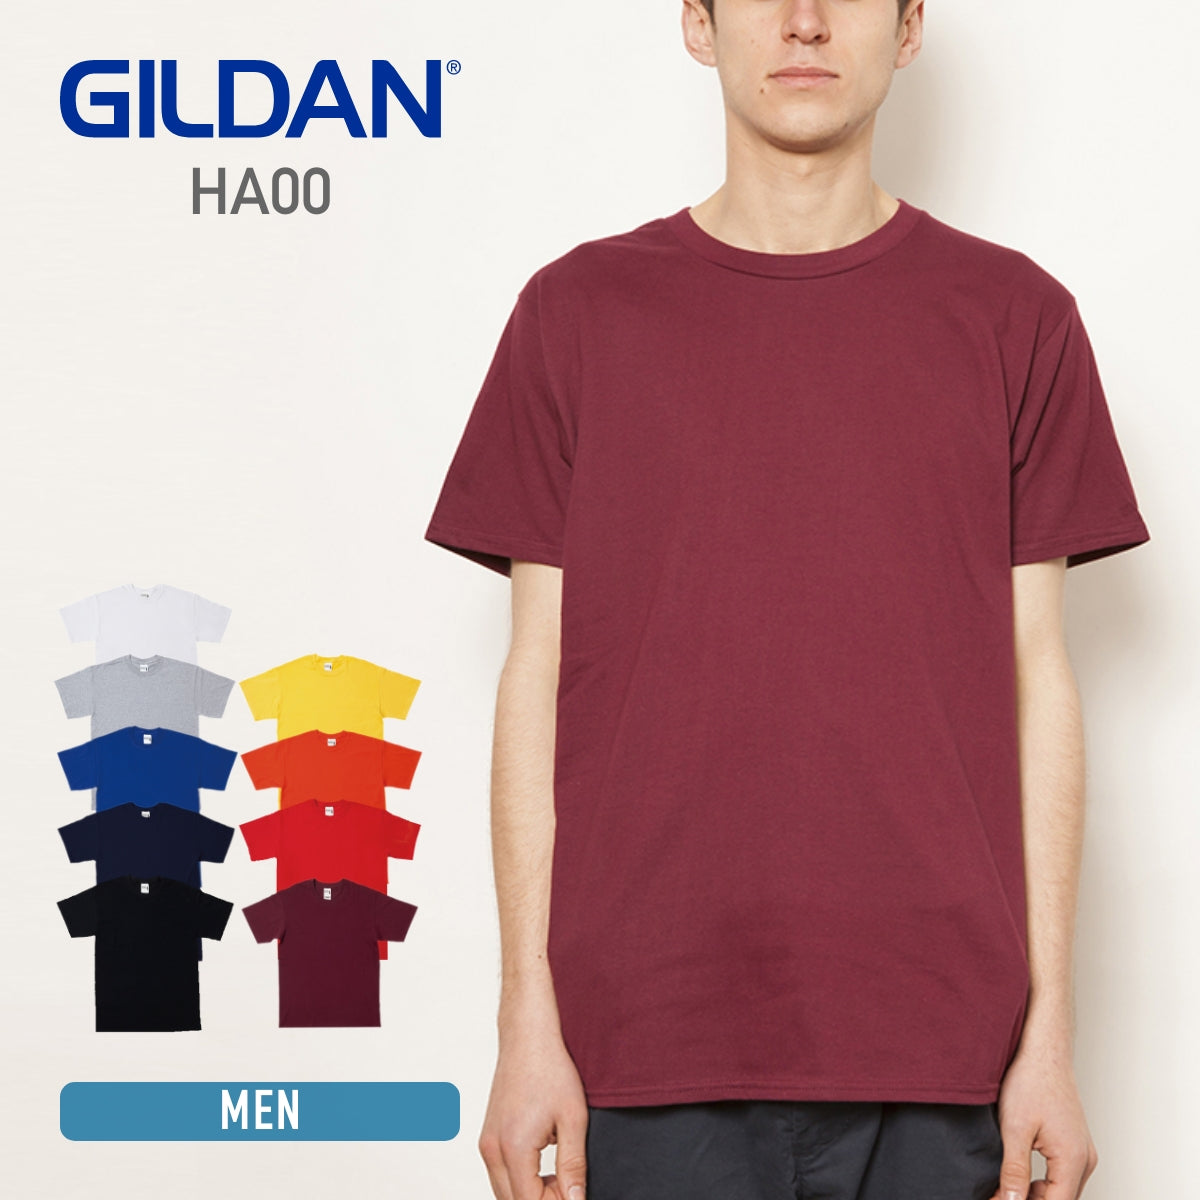 GILDAN(ギルダン)激安通販 - Tshirt.stビジネス